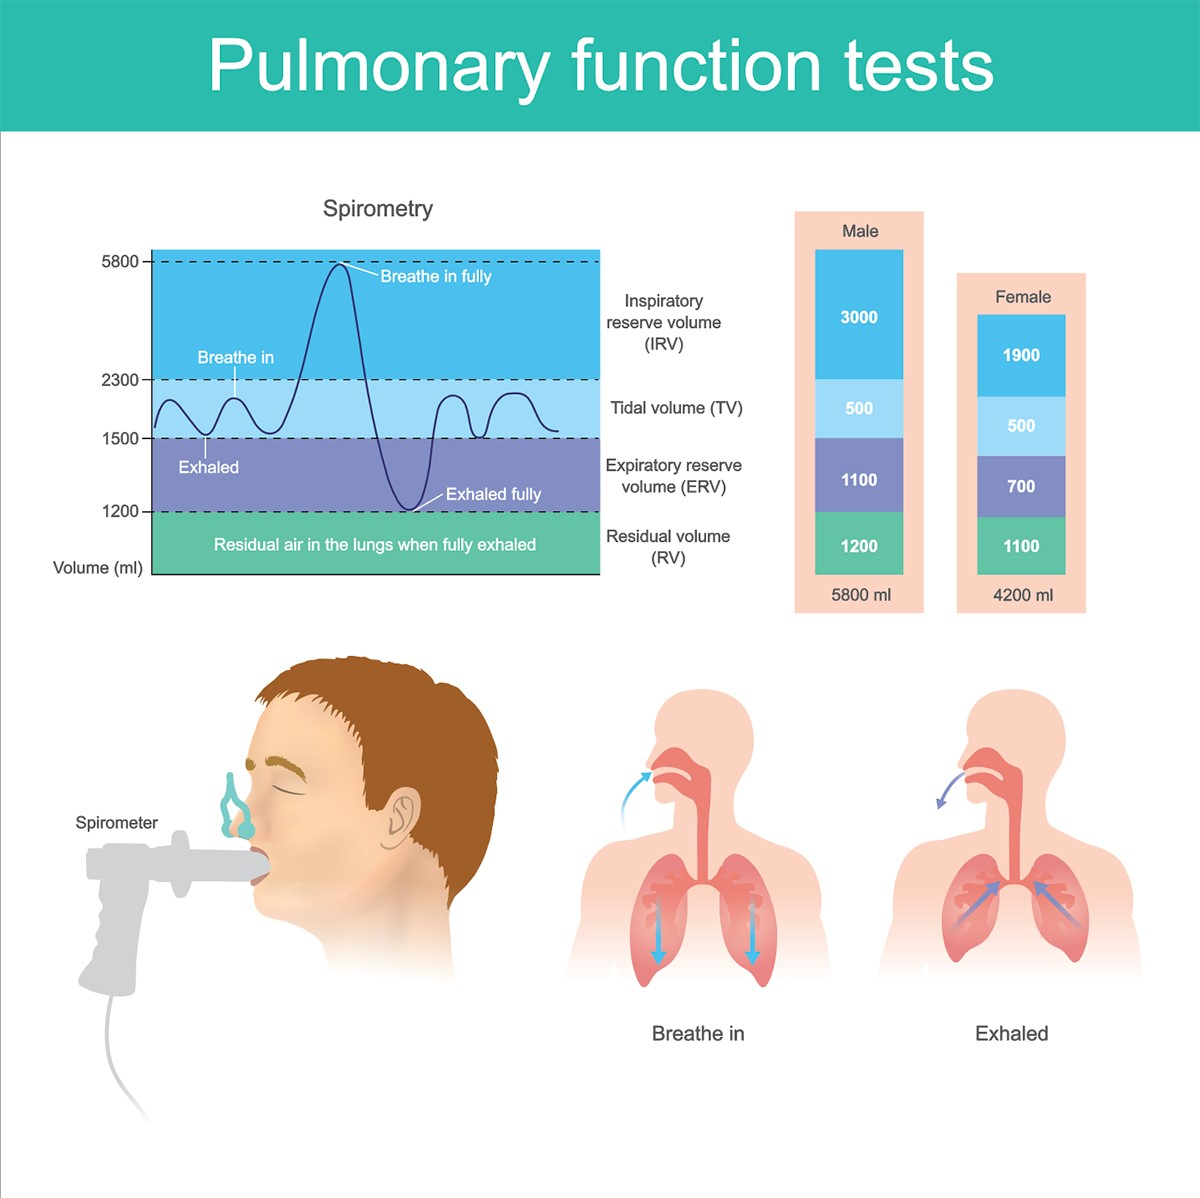 lung sounds chart